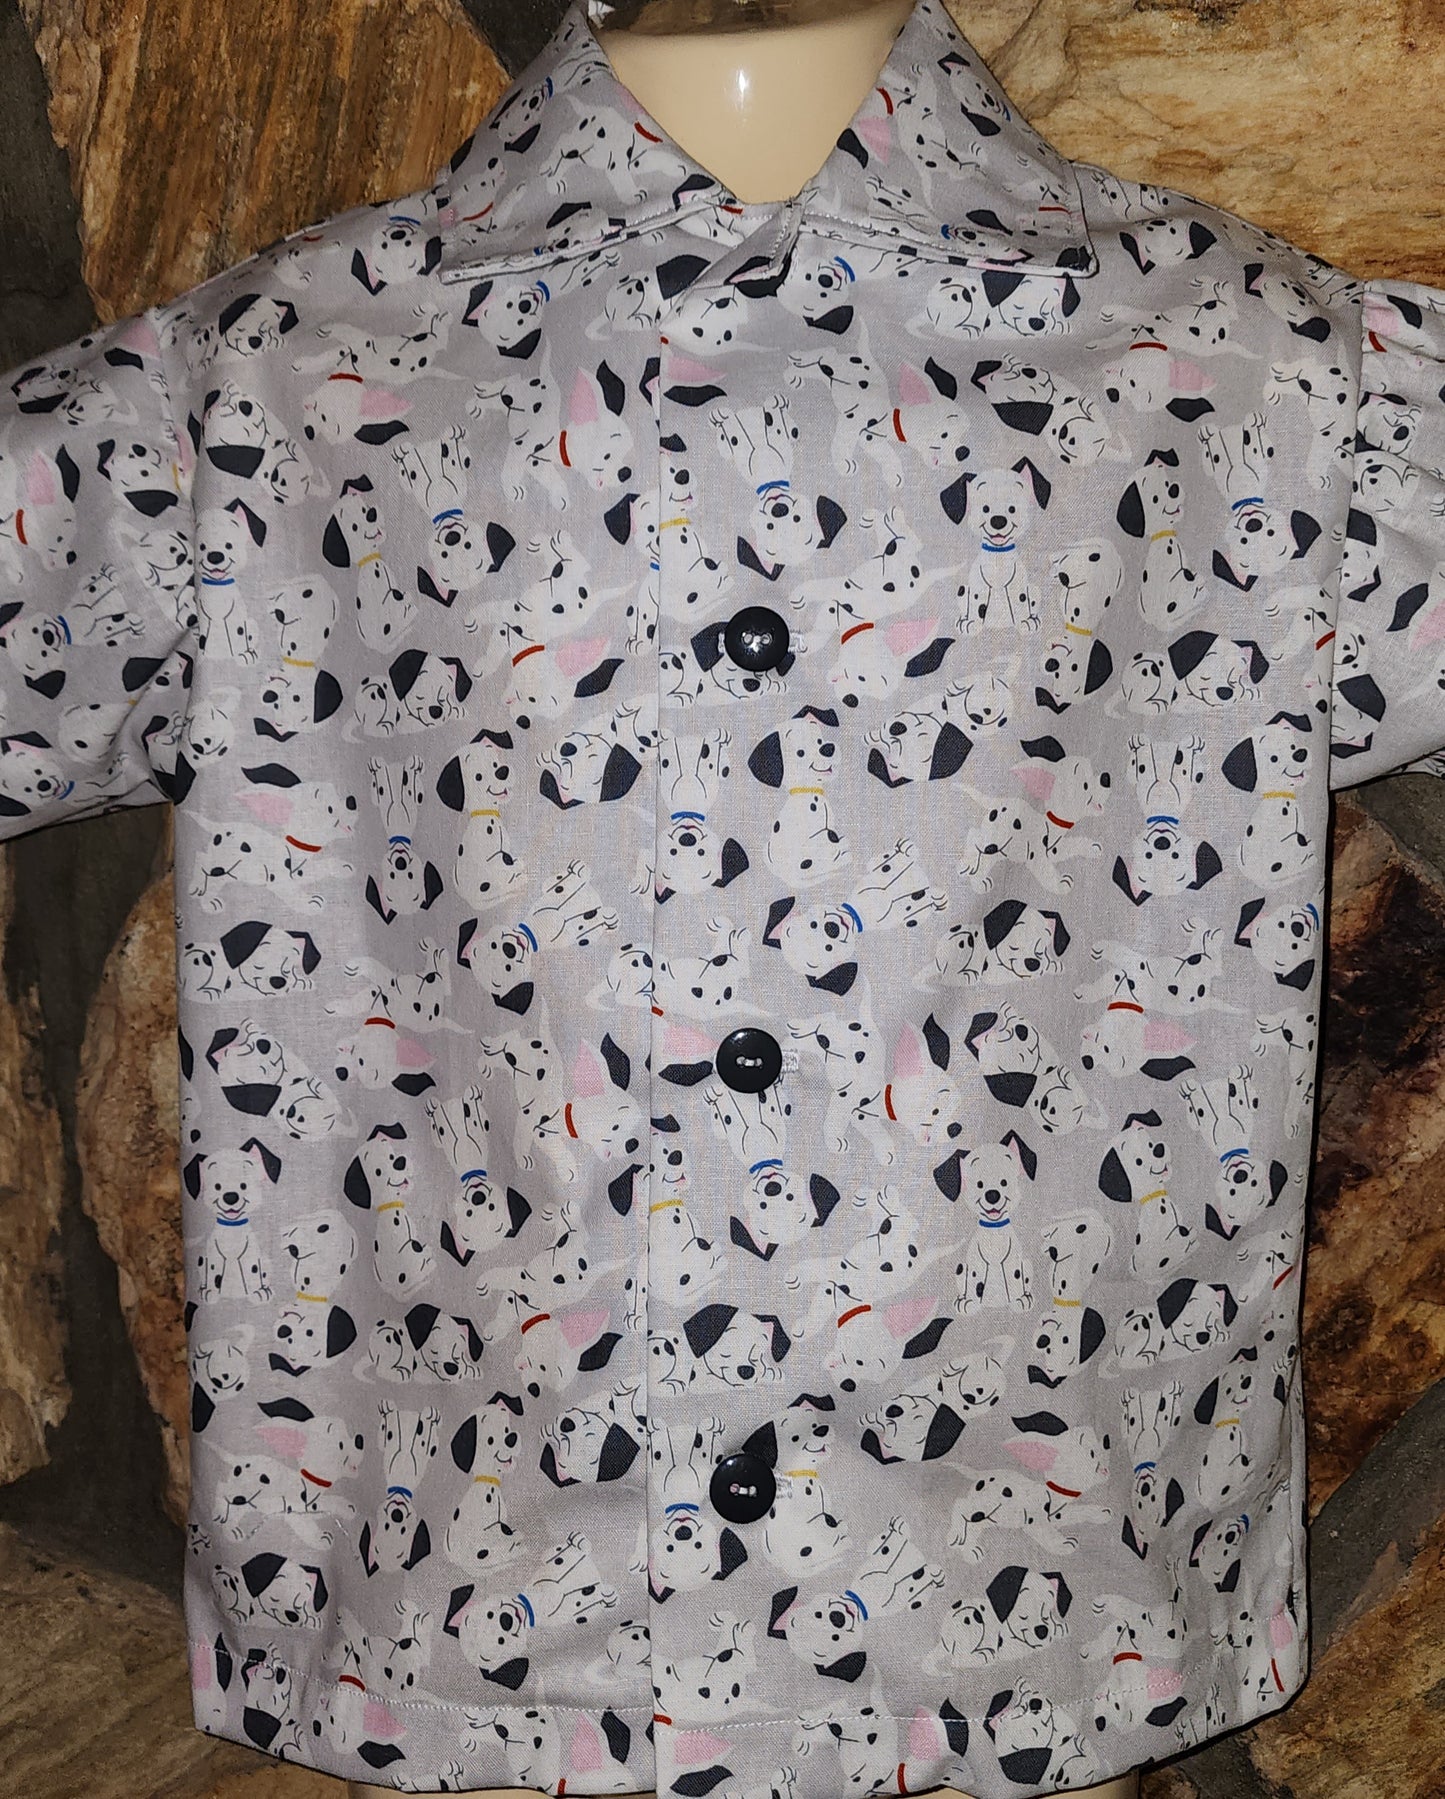 101 Dalmatians Shirt